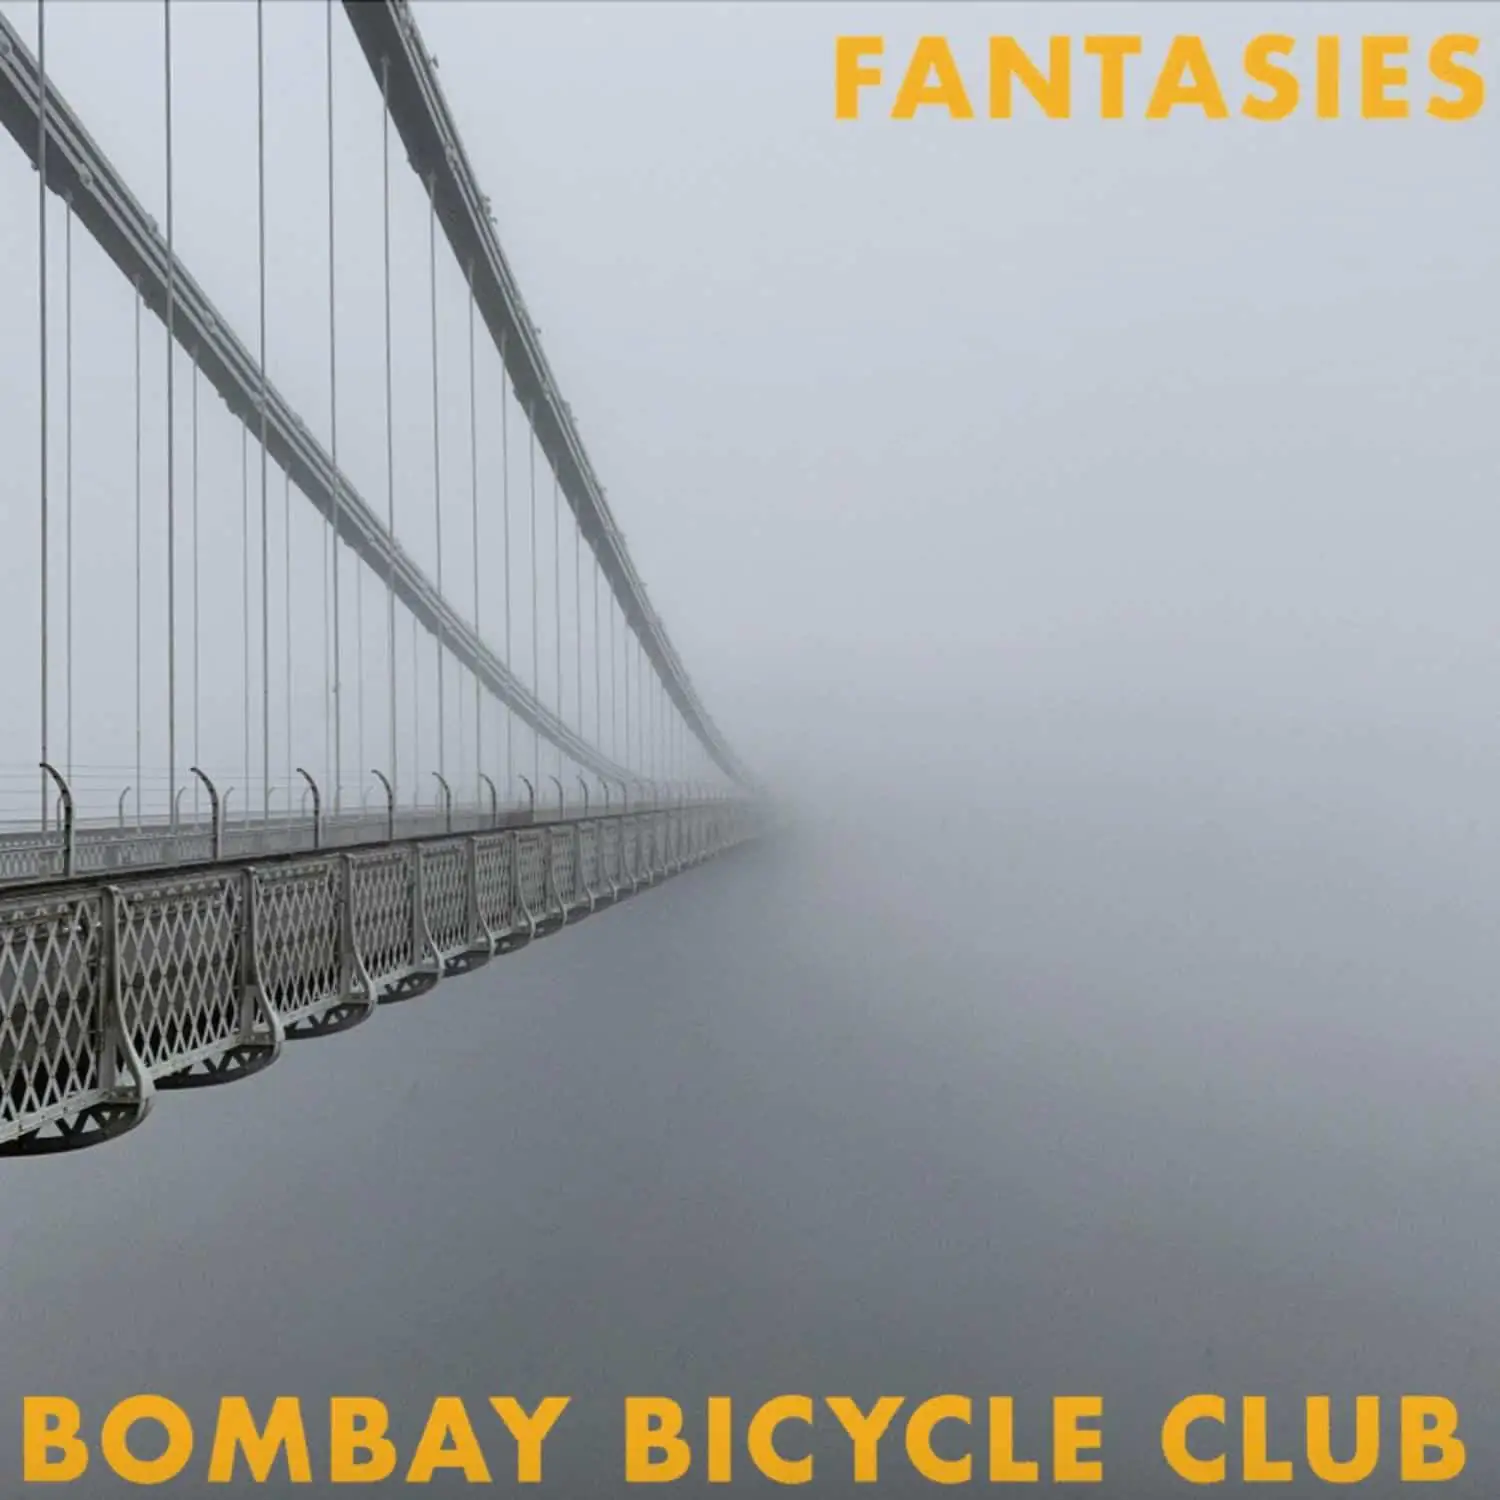 EP REVIEW: Bombay Bicycle Club – Fantasies